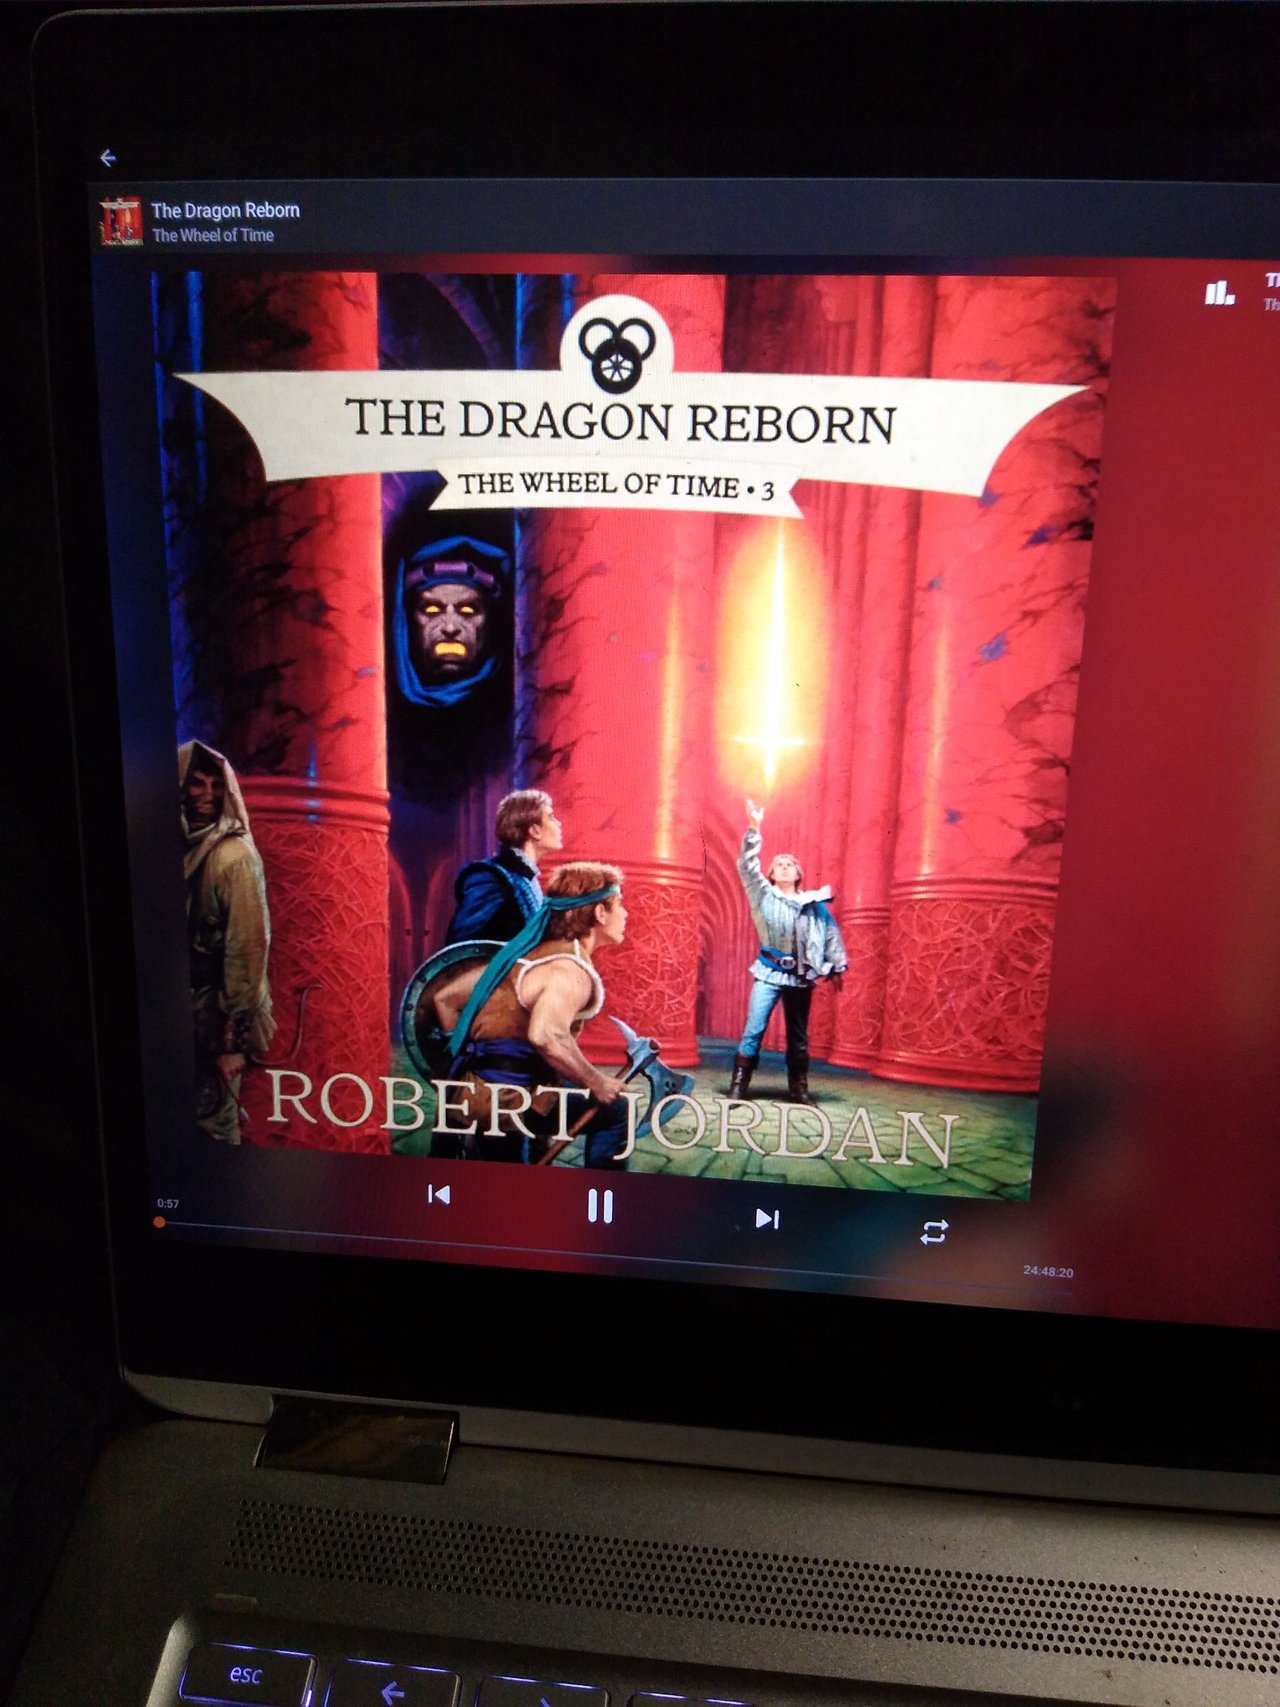 Robert Jordan and The wheel of Time book 3 the dragon reborn.